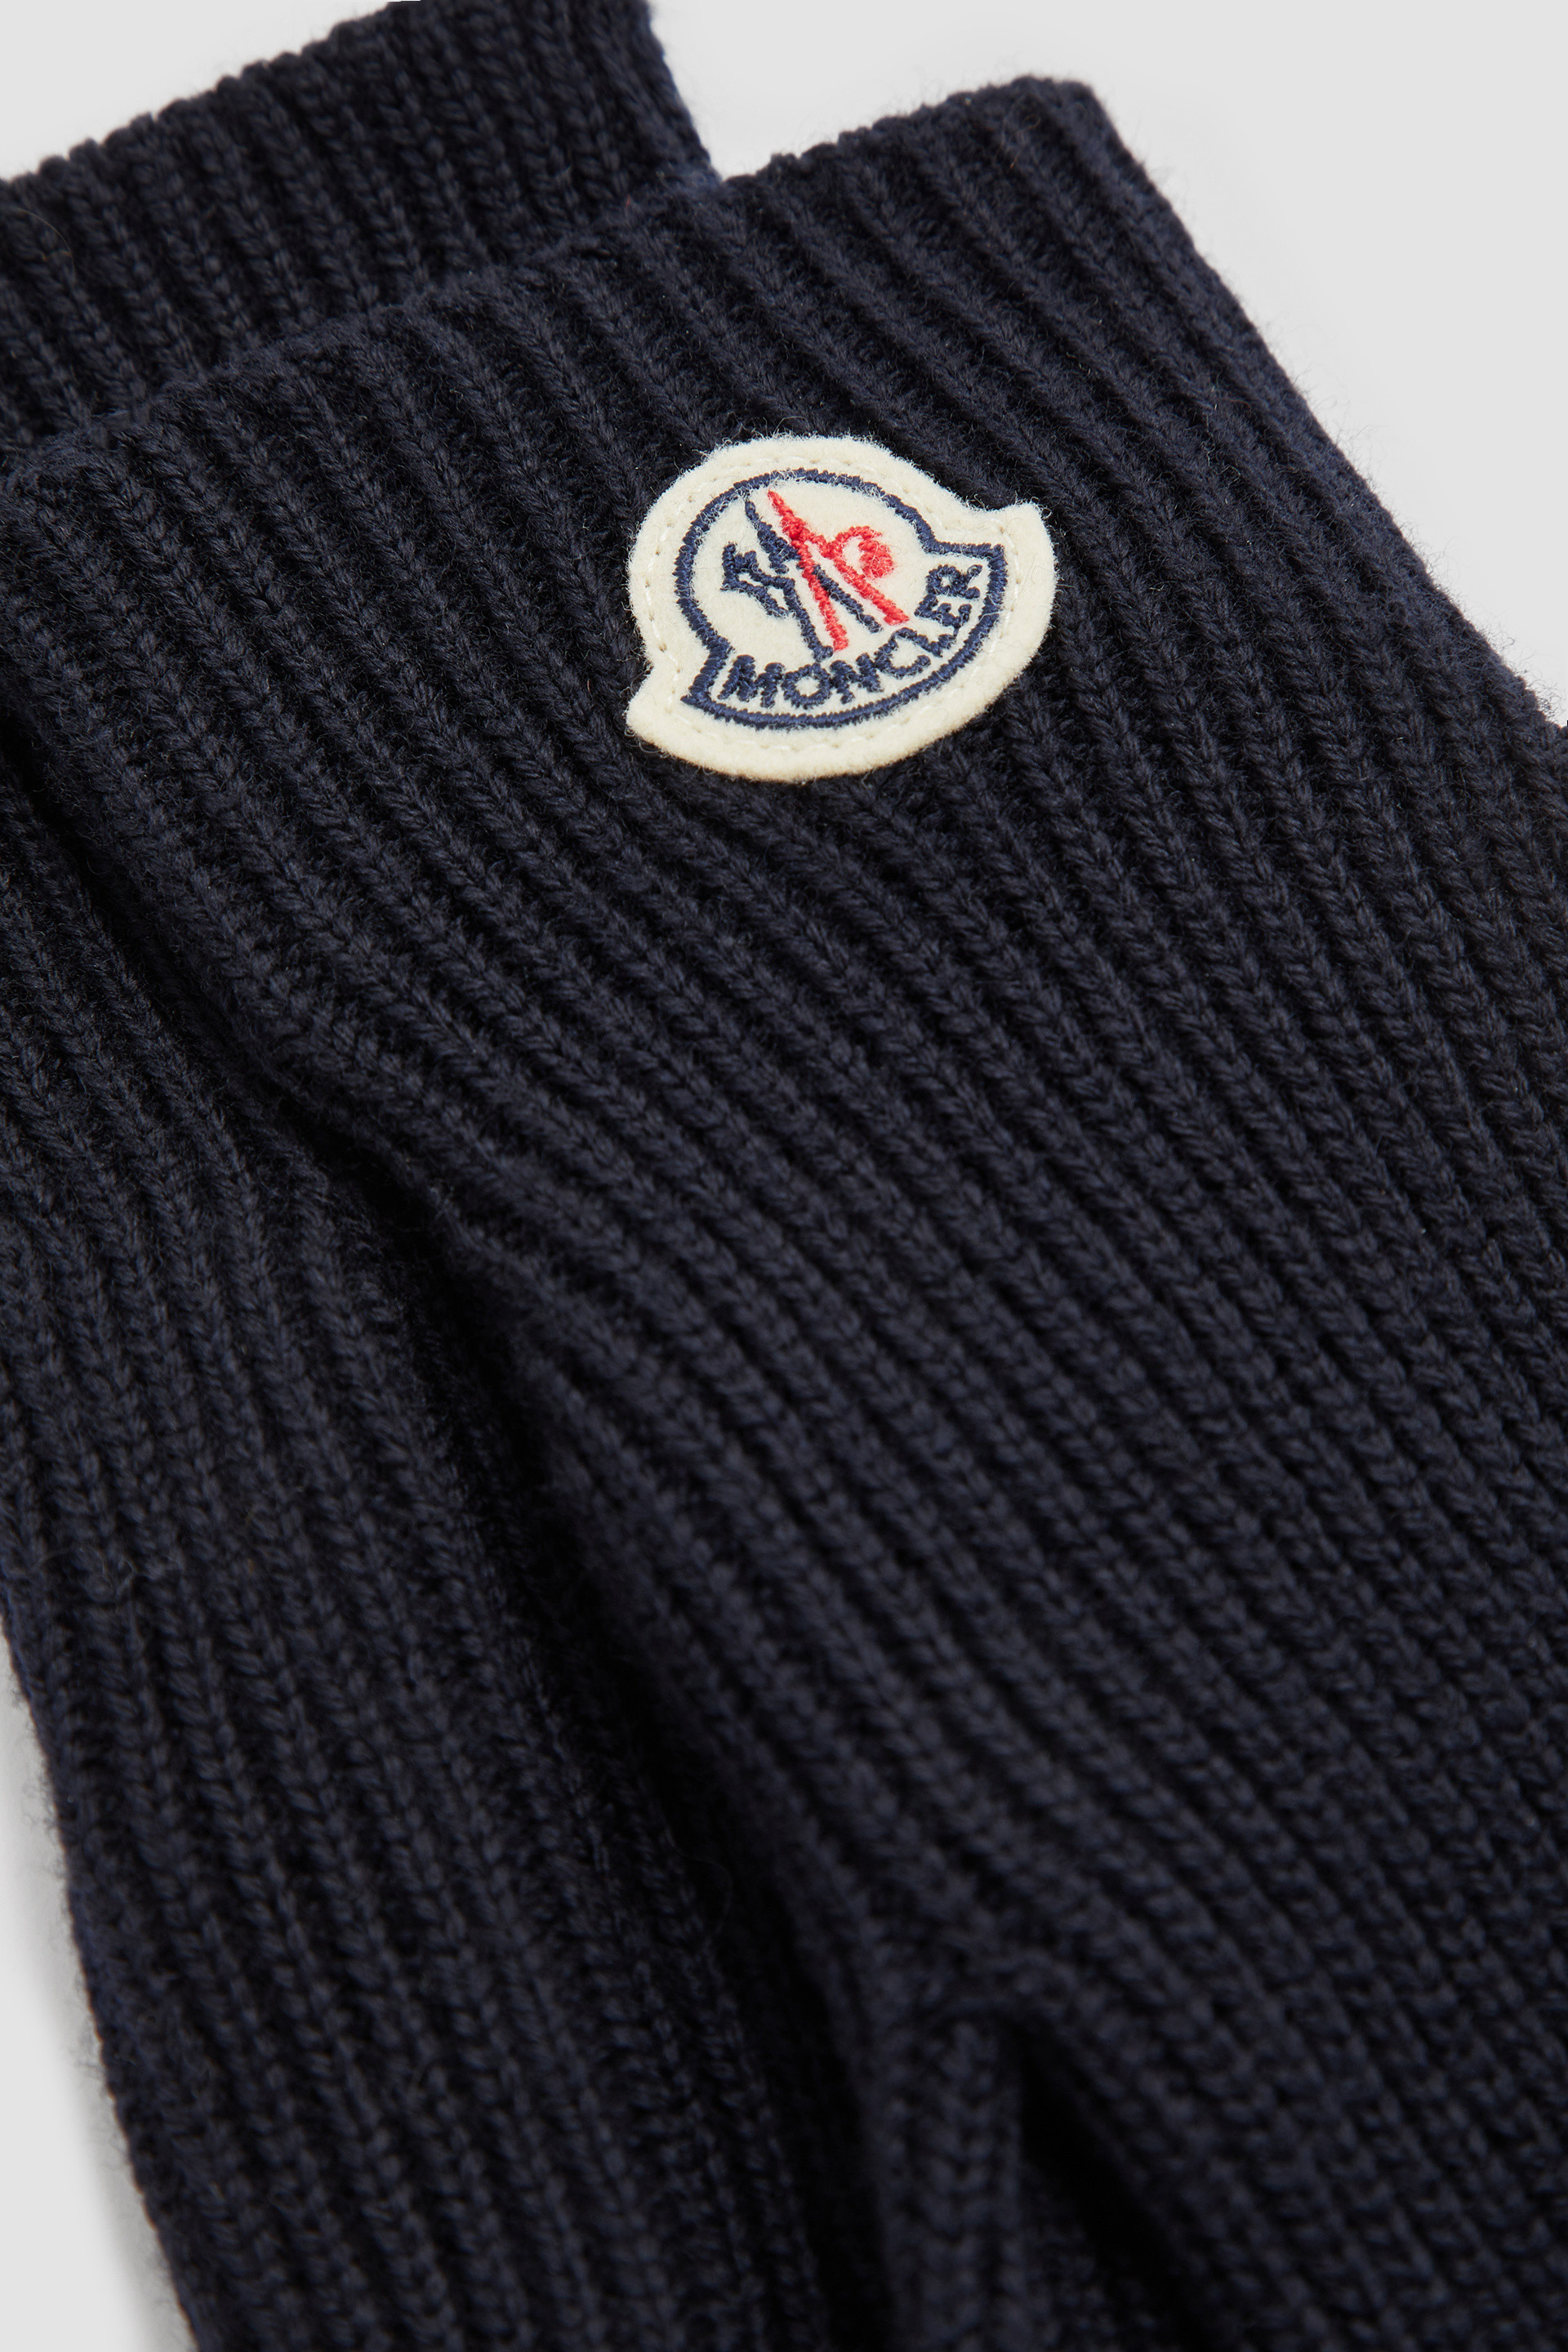 Gloves & Scarves for Men - made of Cashmere or Wool | Moncler US